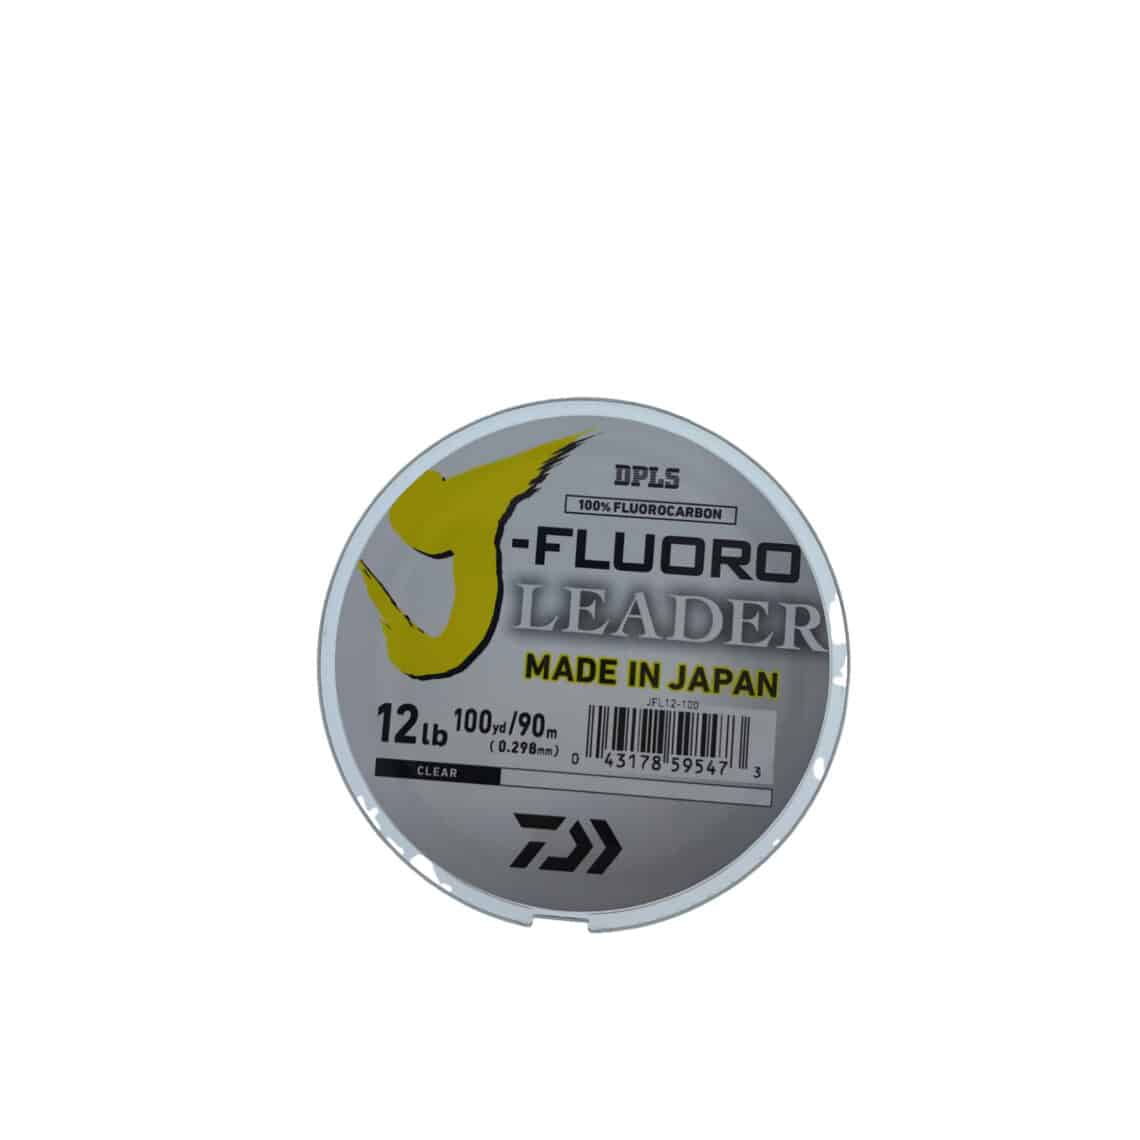 Daiwa JFL150-50 J-Fluoro Fluorocarbon Leader 150Lb 50Yd Clear Fishing Line 